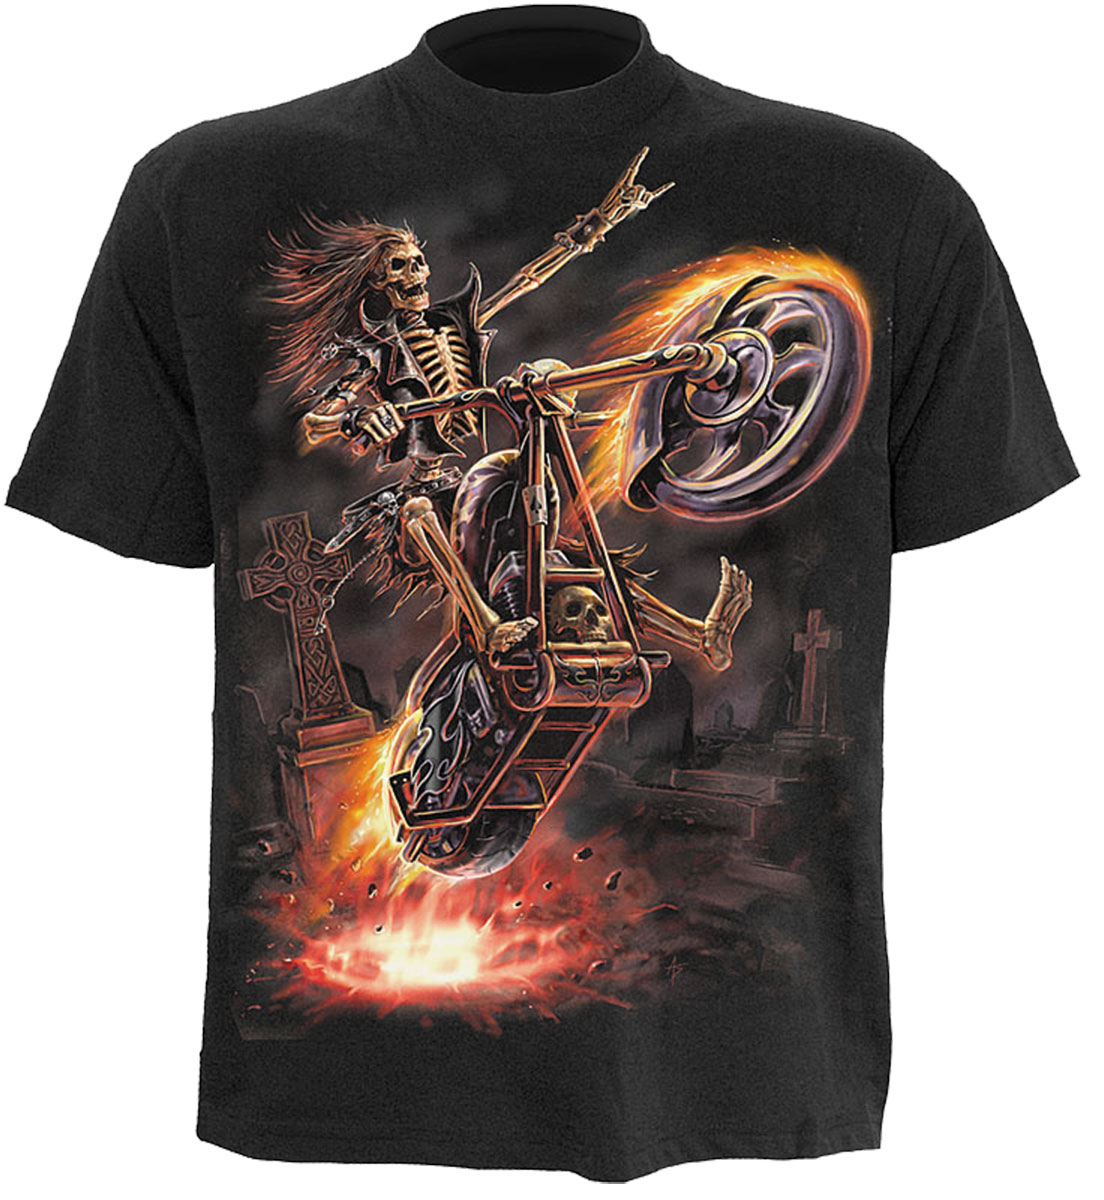 Hell Rider Kids T-Shirt Black (Plain)